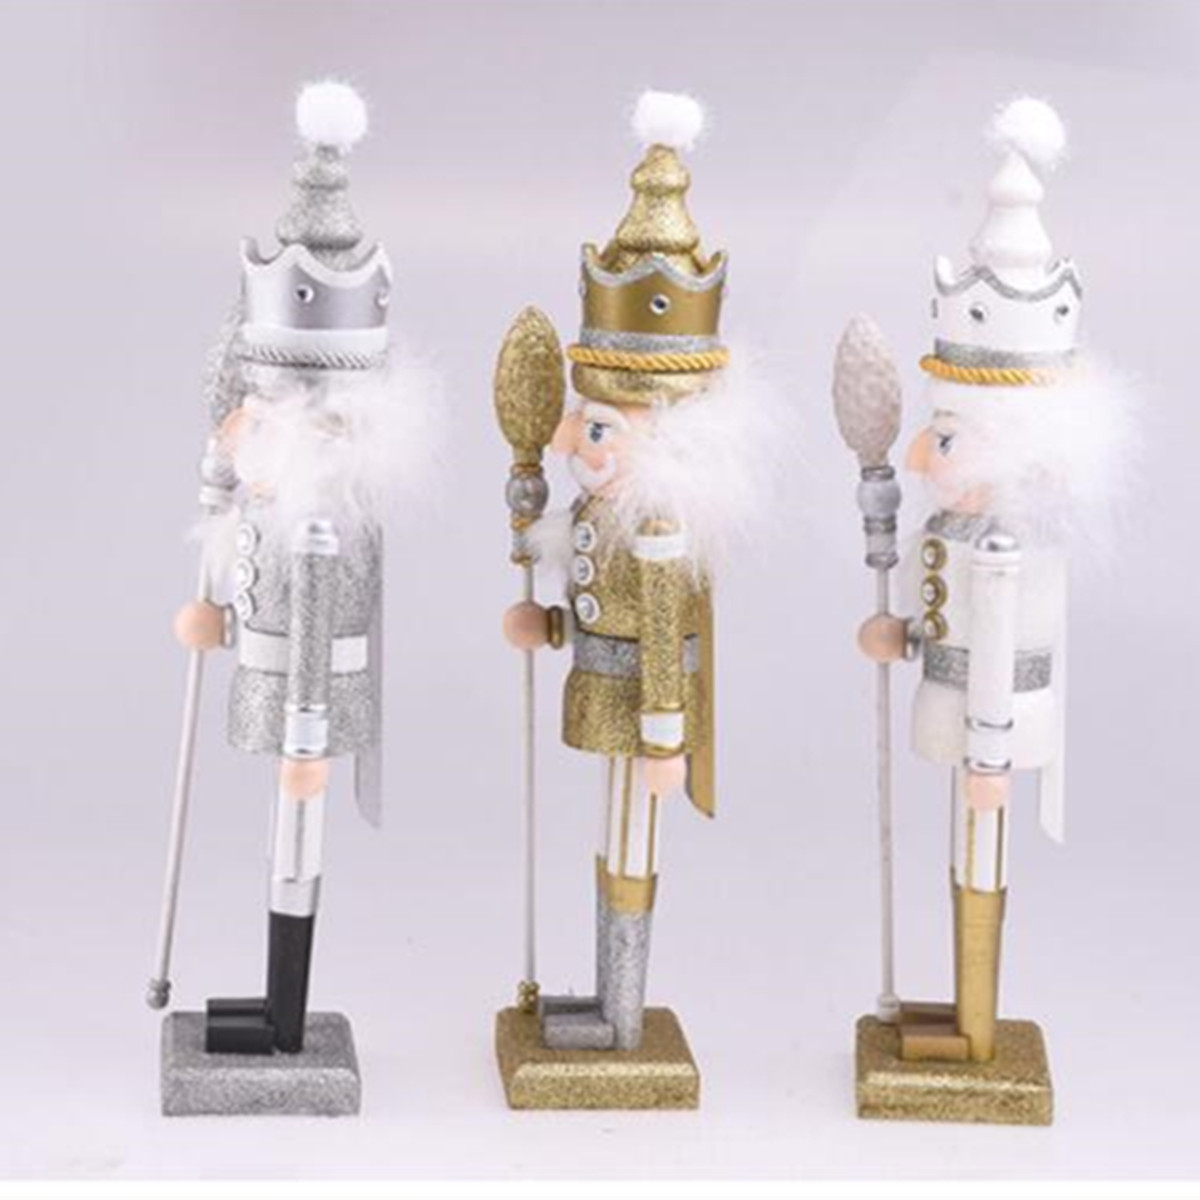 42cm-Wooden-Nutcracker-Doll-Soldier-Vintage-Handcraft-Decoration-Christmas-Action-Figure-Gifts-1386592-4